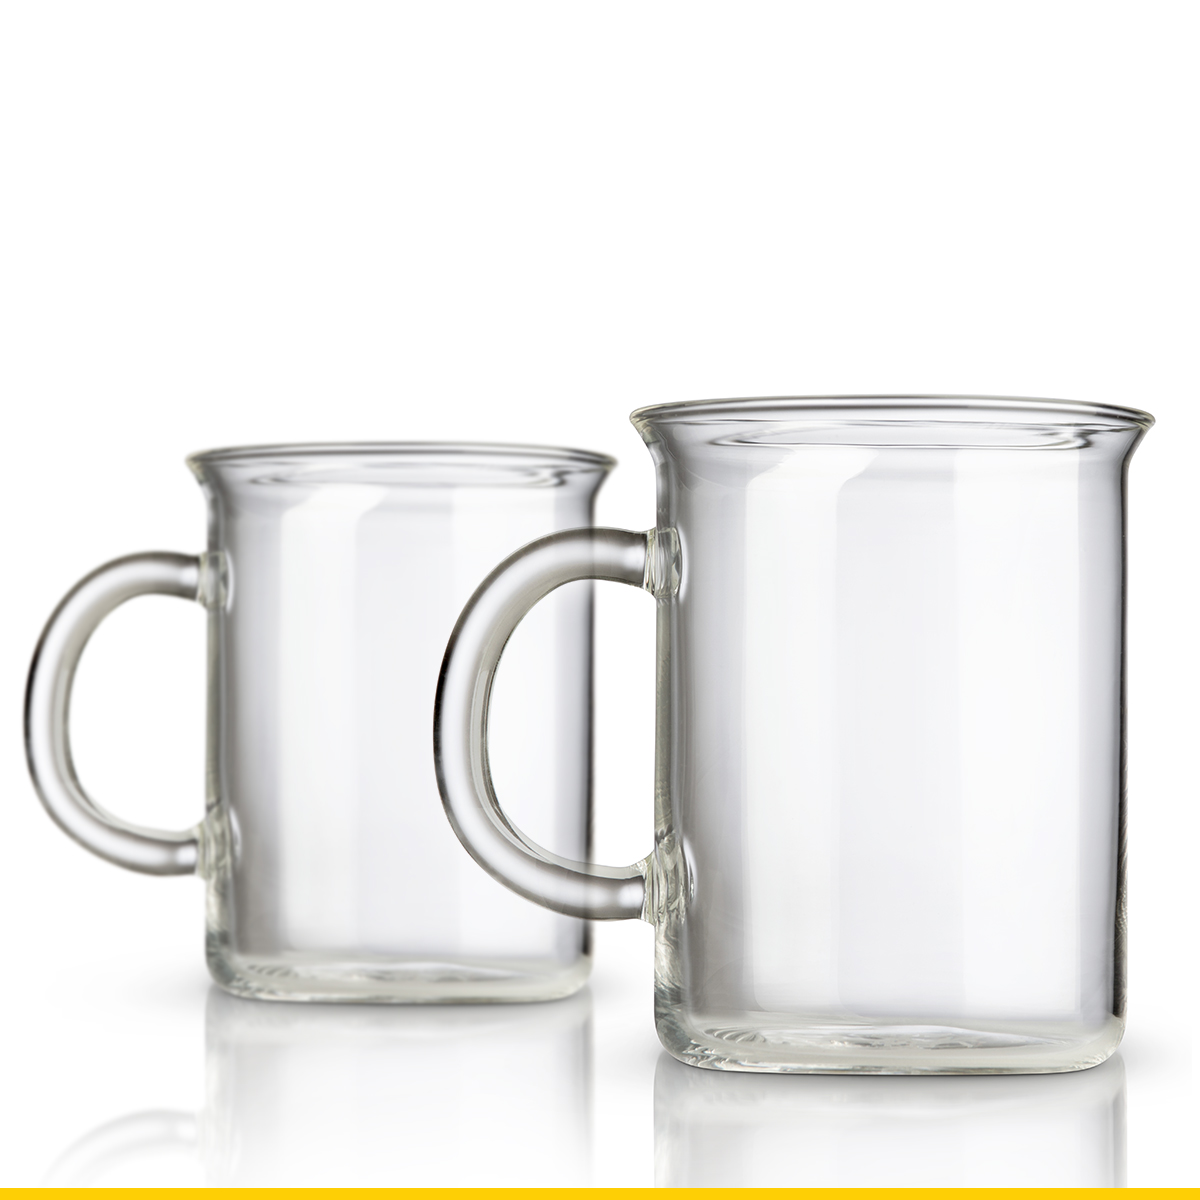 https://store.chemexcoffeemaker.com/media/catalog/product/c/h/chemex-glass-murray-mug-detail.jpg